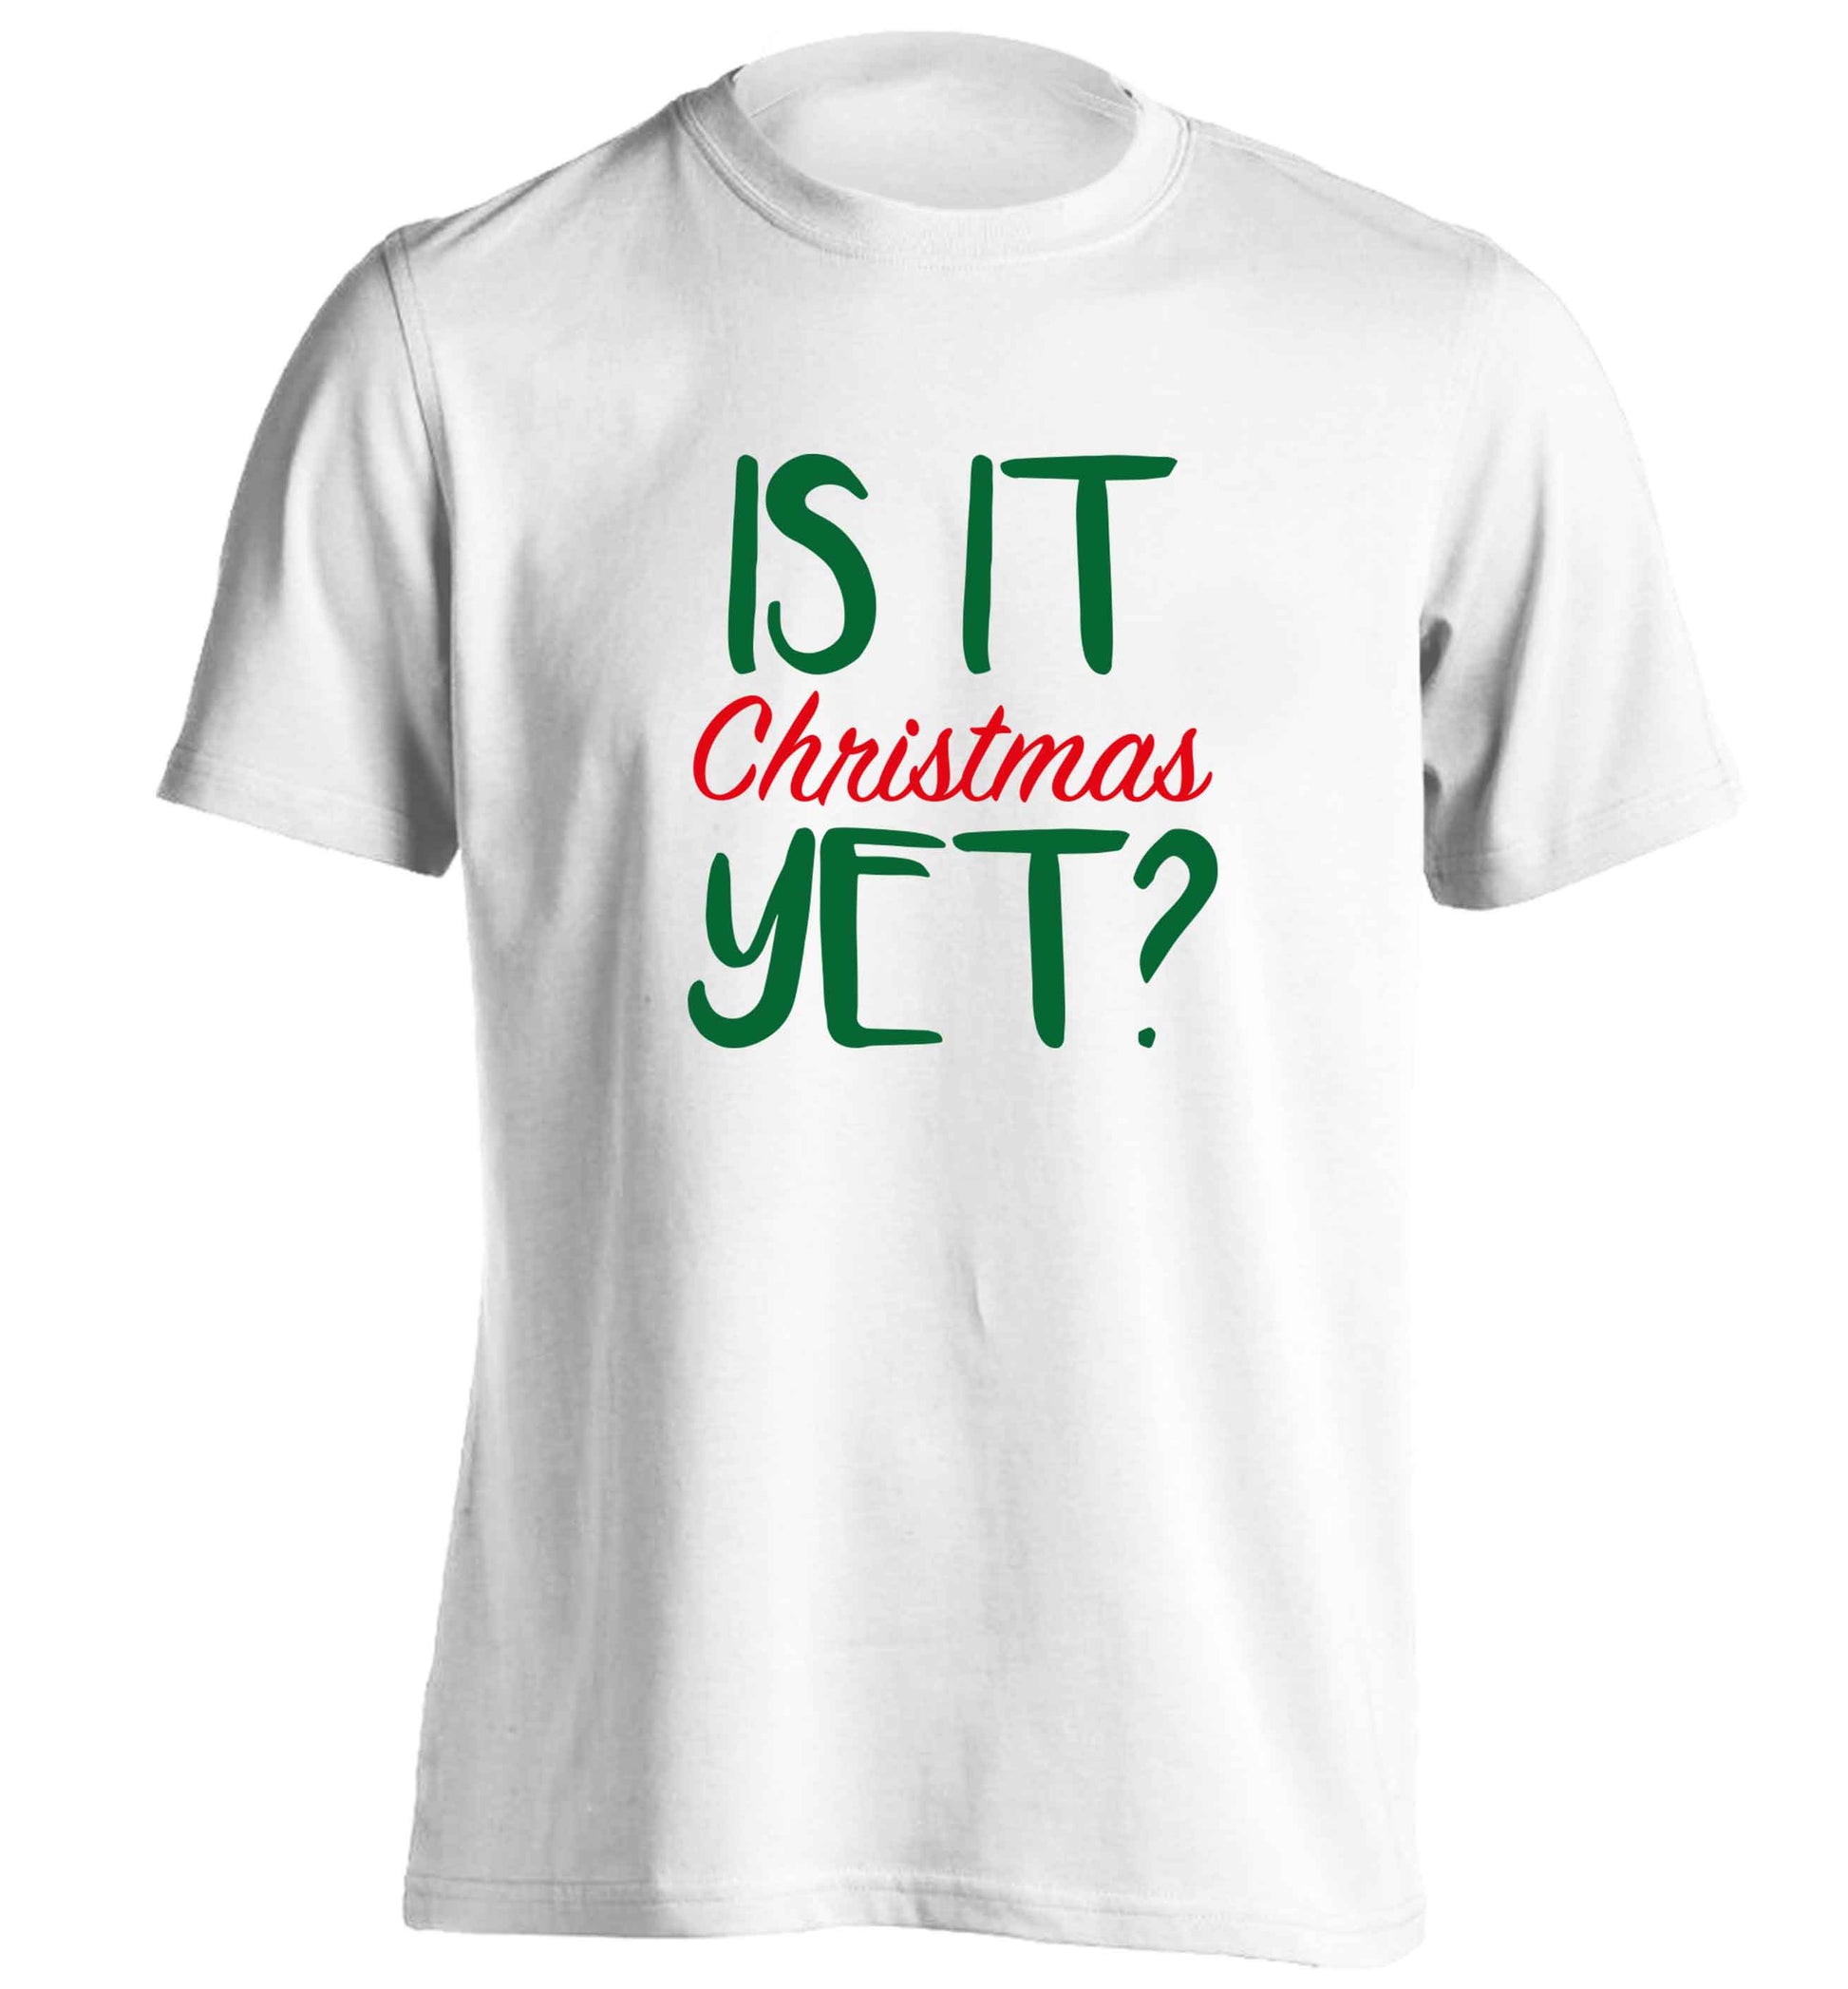 Is it Christmas yet? adults unisex white Tshirt 2XL